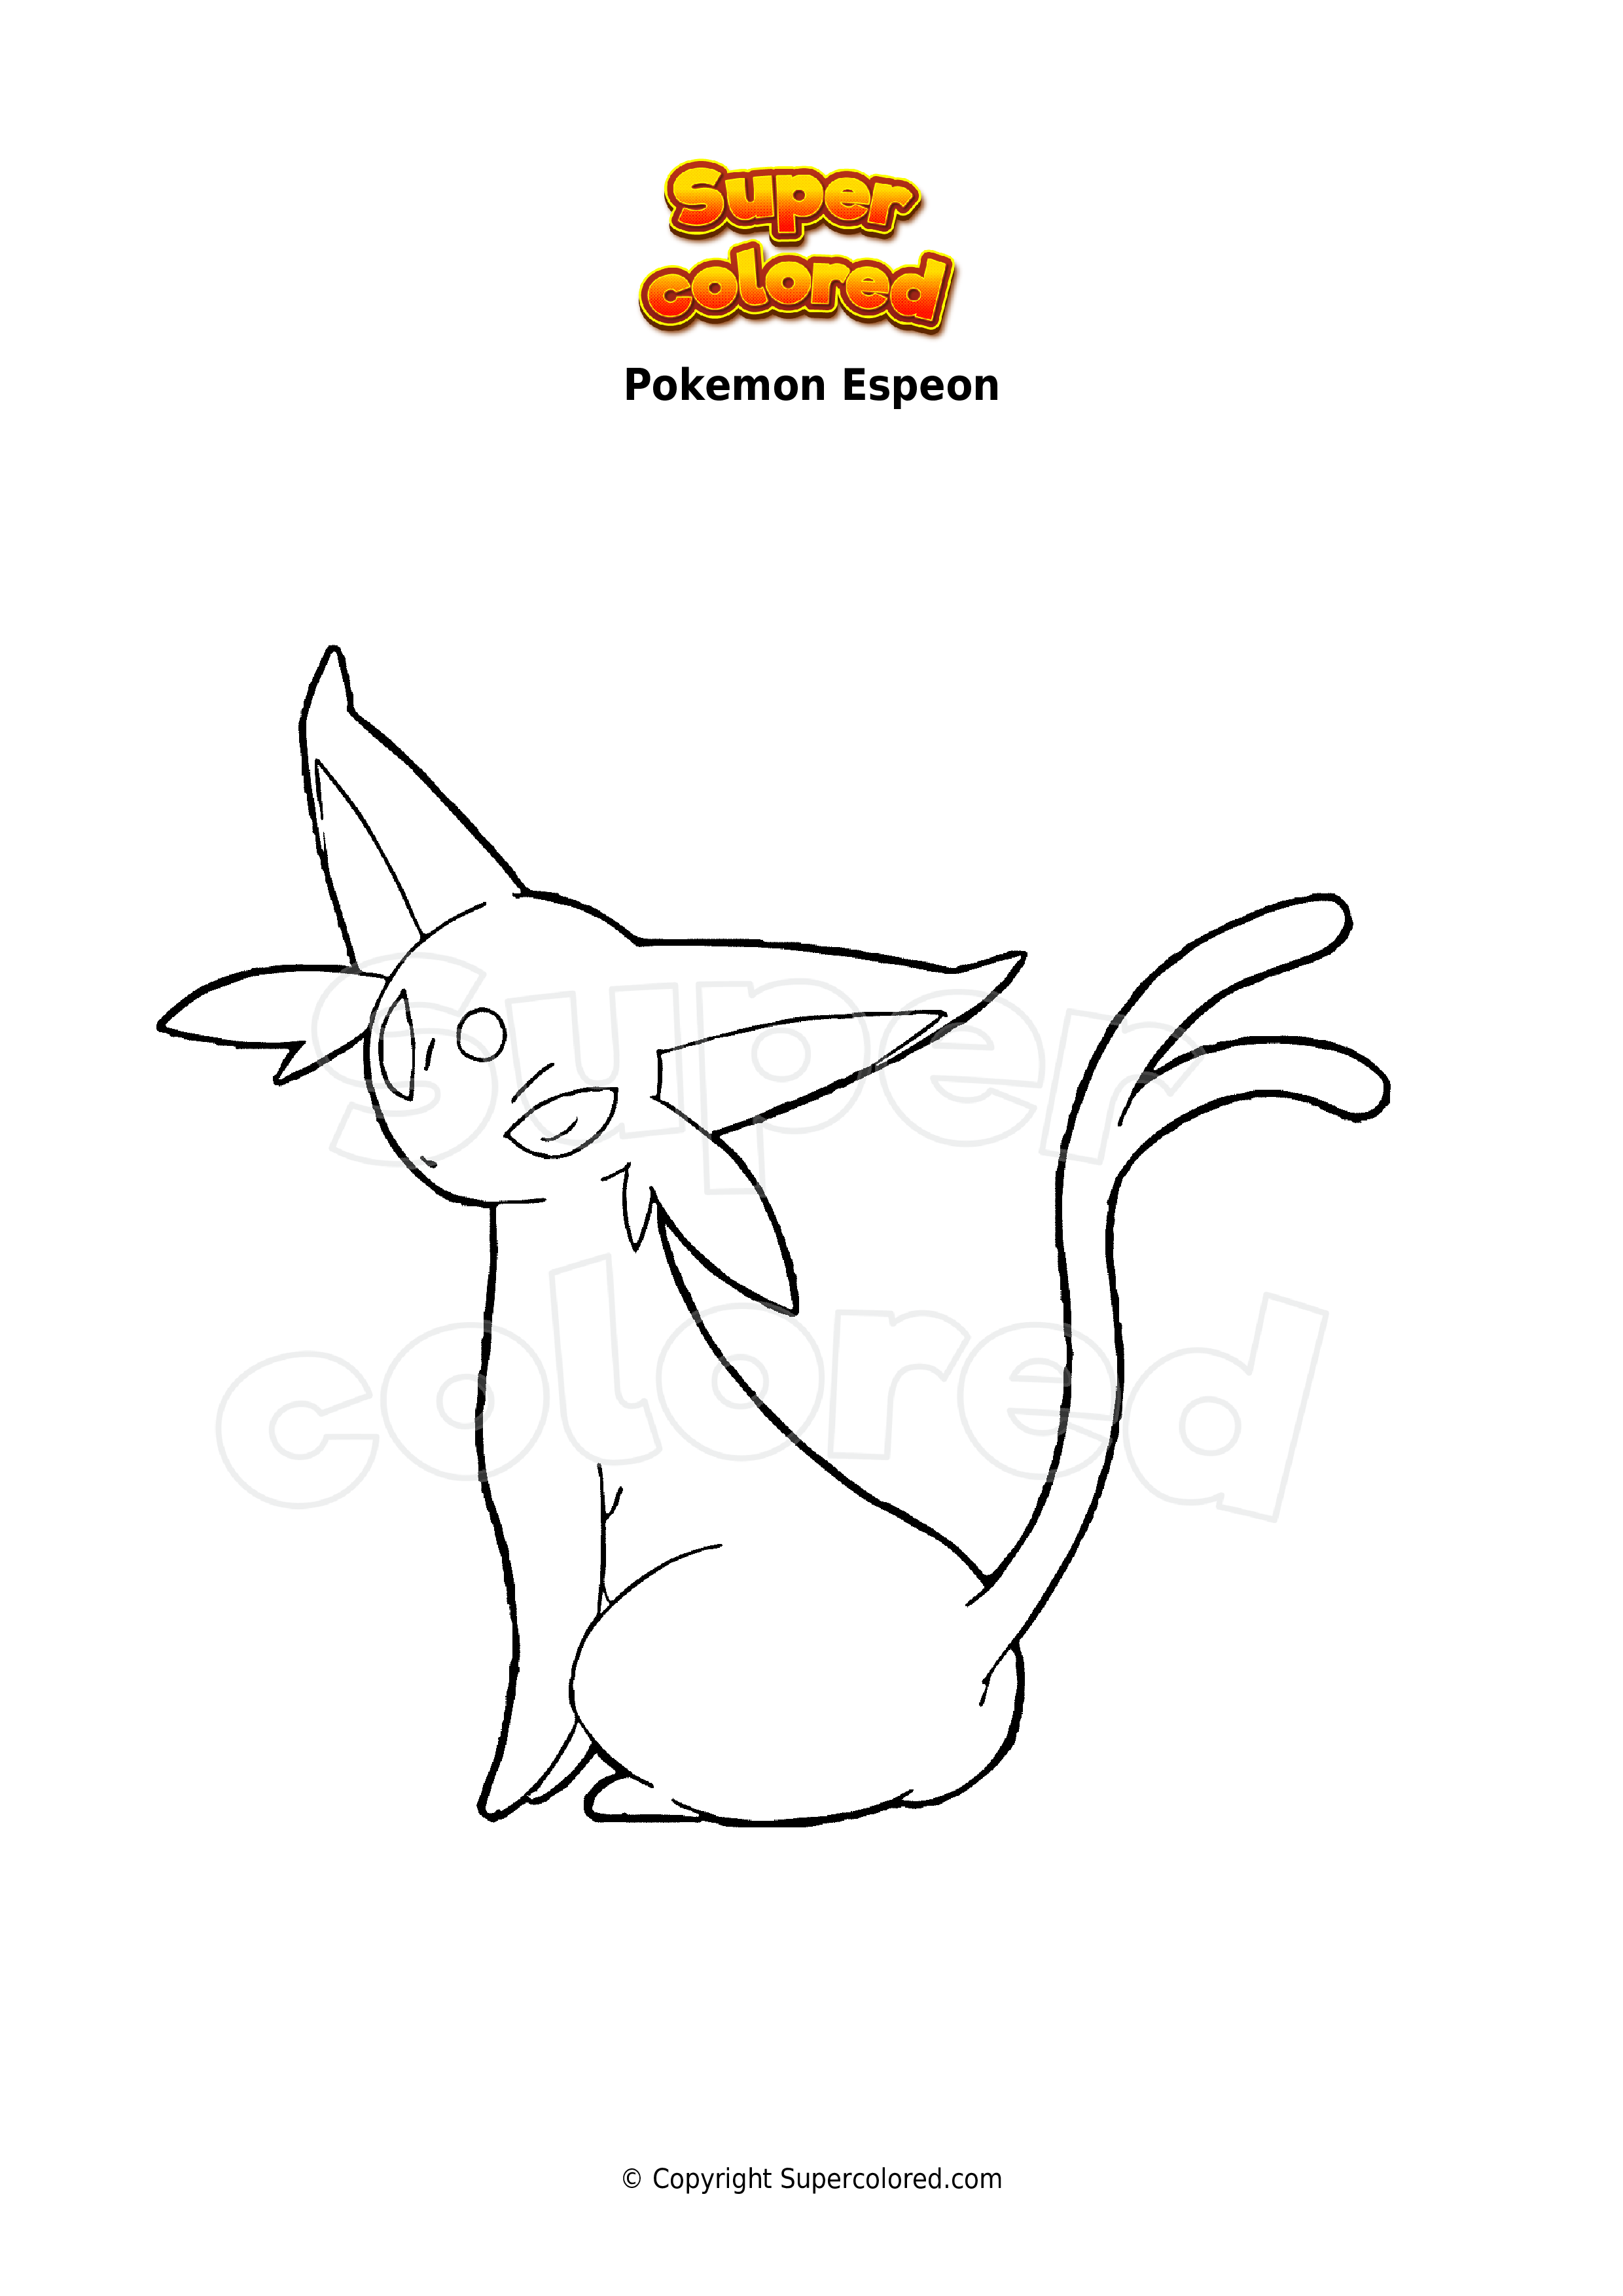 27+ Espeon Pokemon Coloring Pages - OceaneKoket